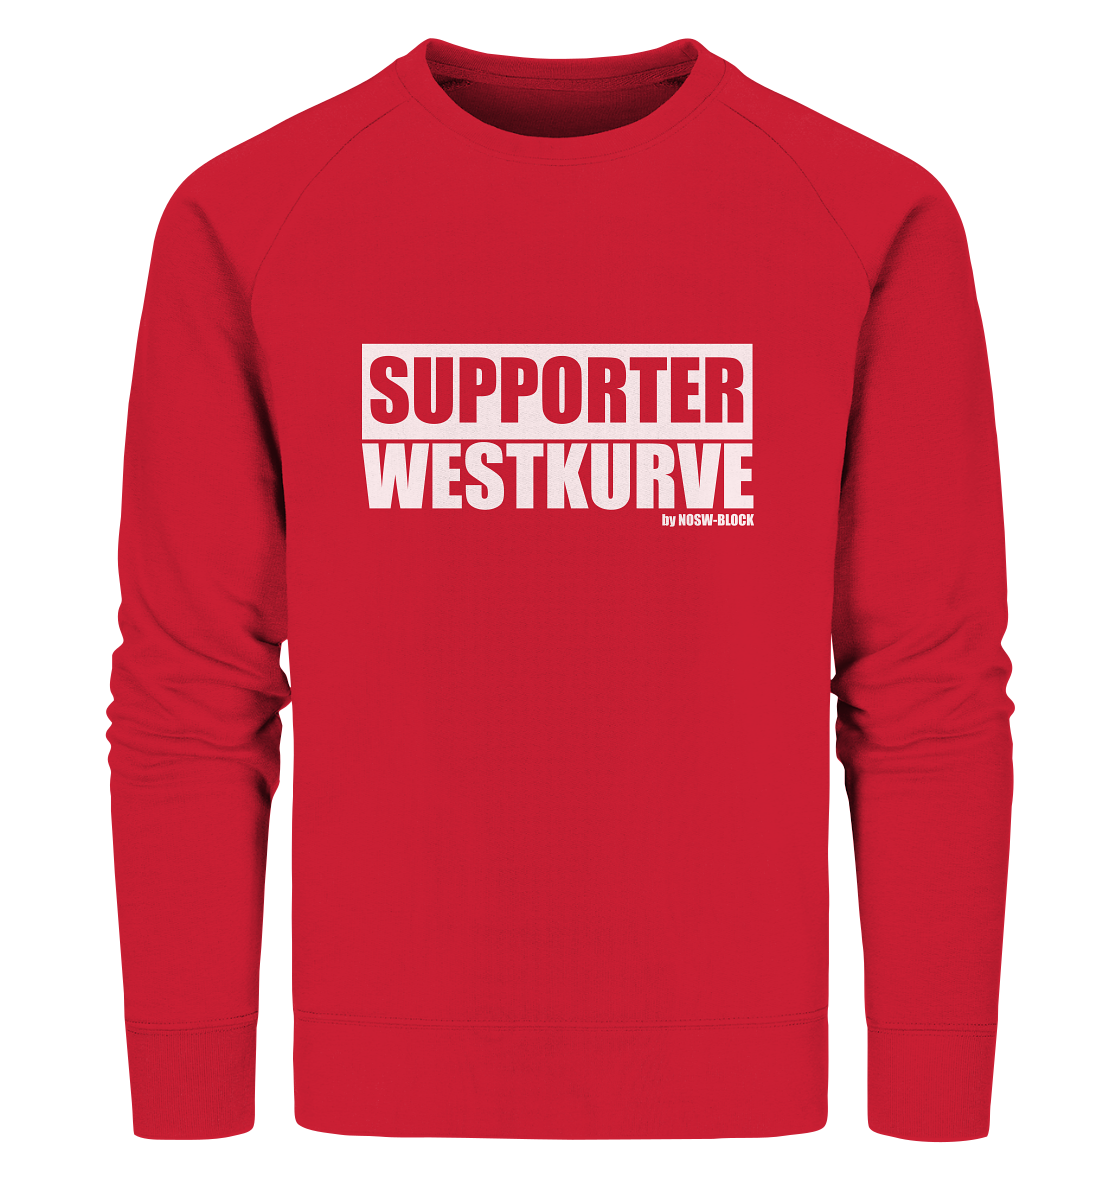 Fanblock "SUPPORTER WESTKURVE" Männer Organic Sweatshirt rot